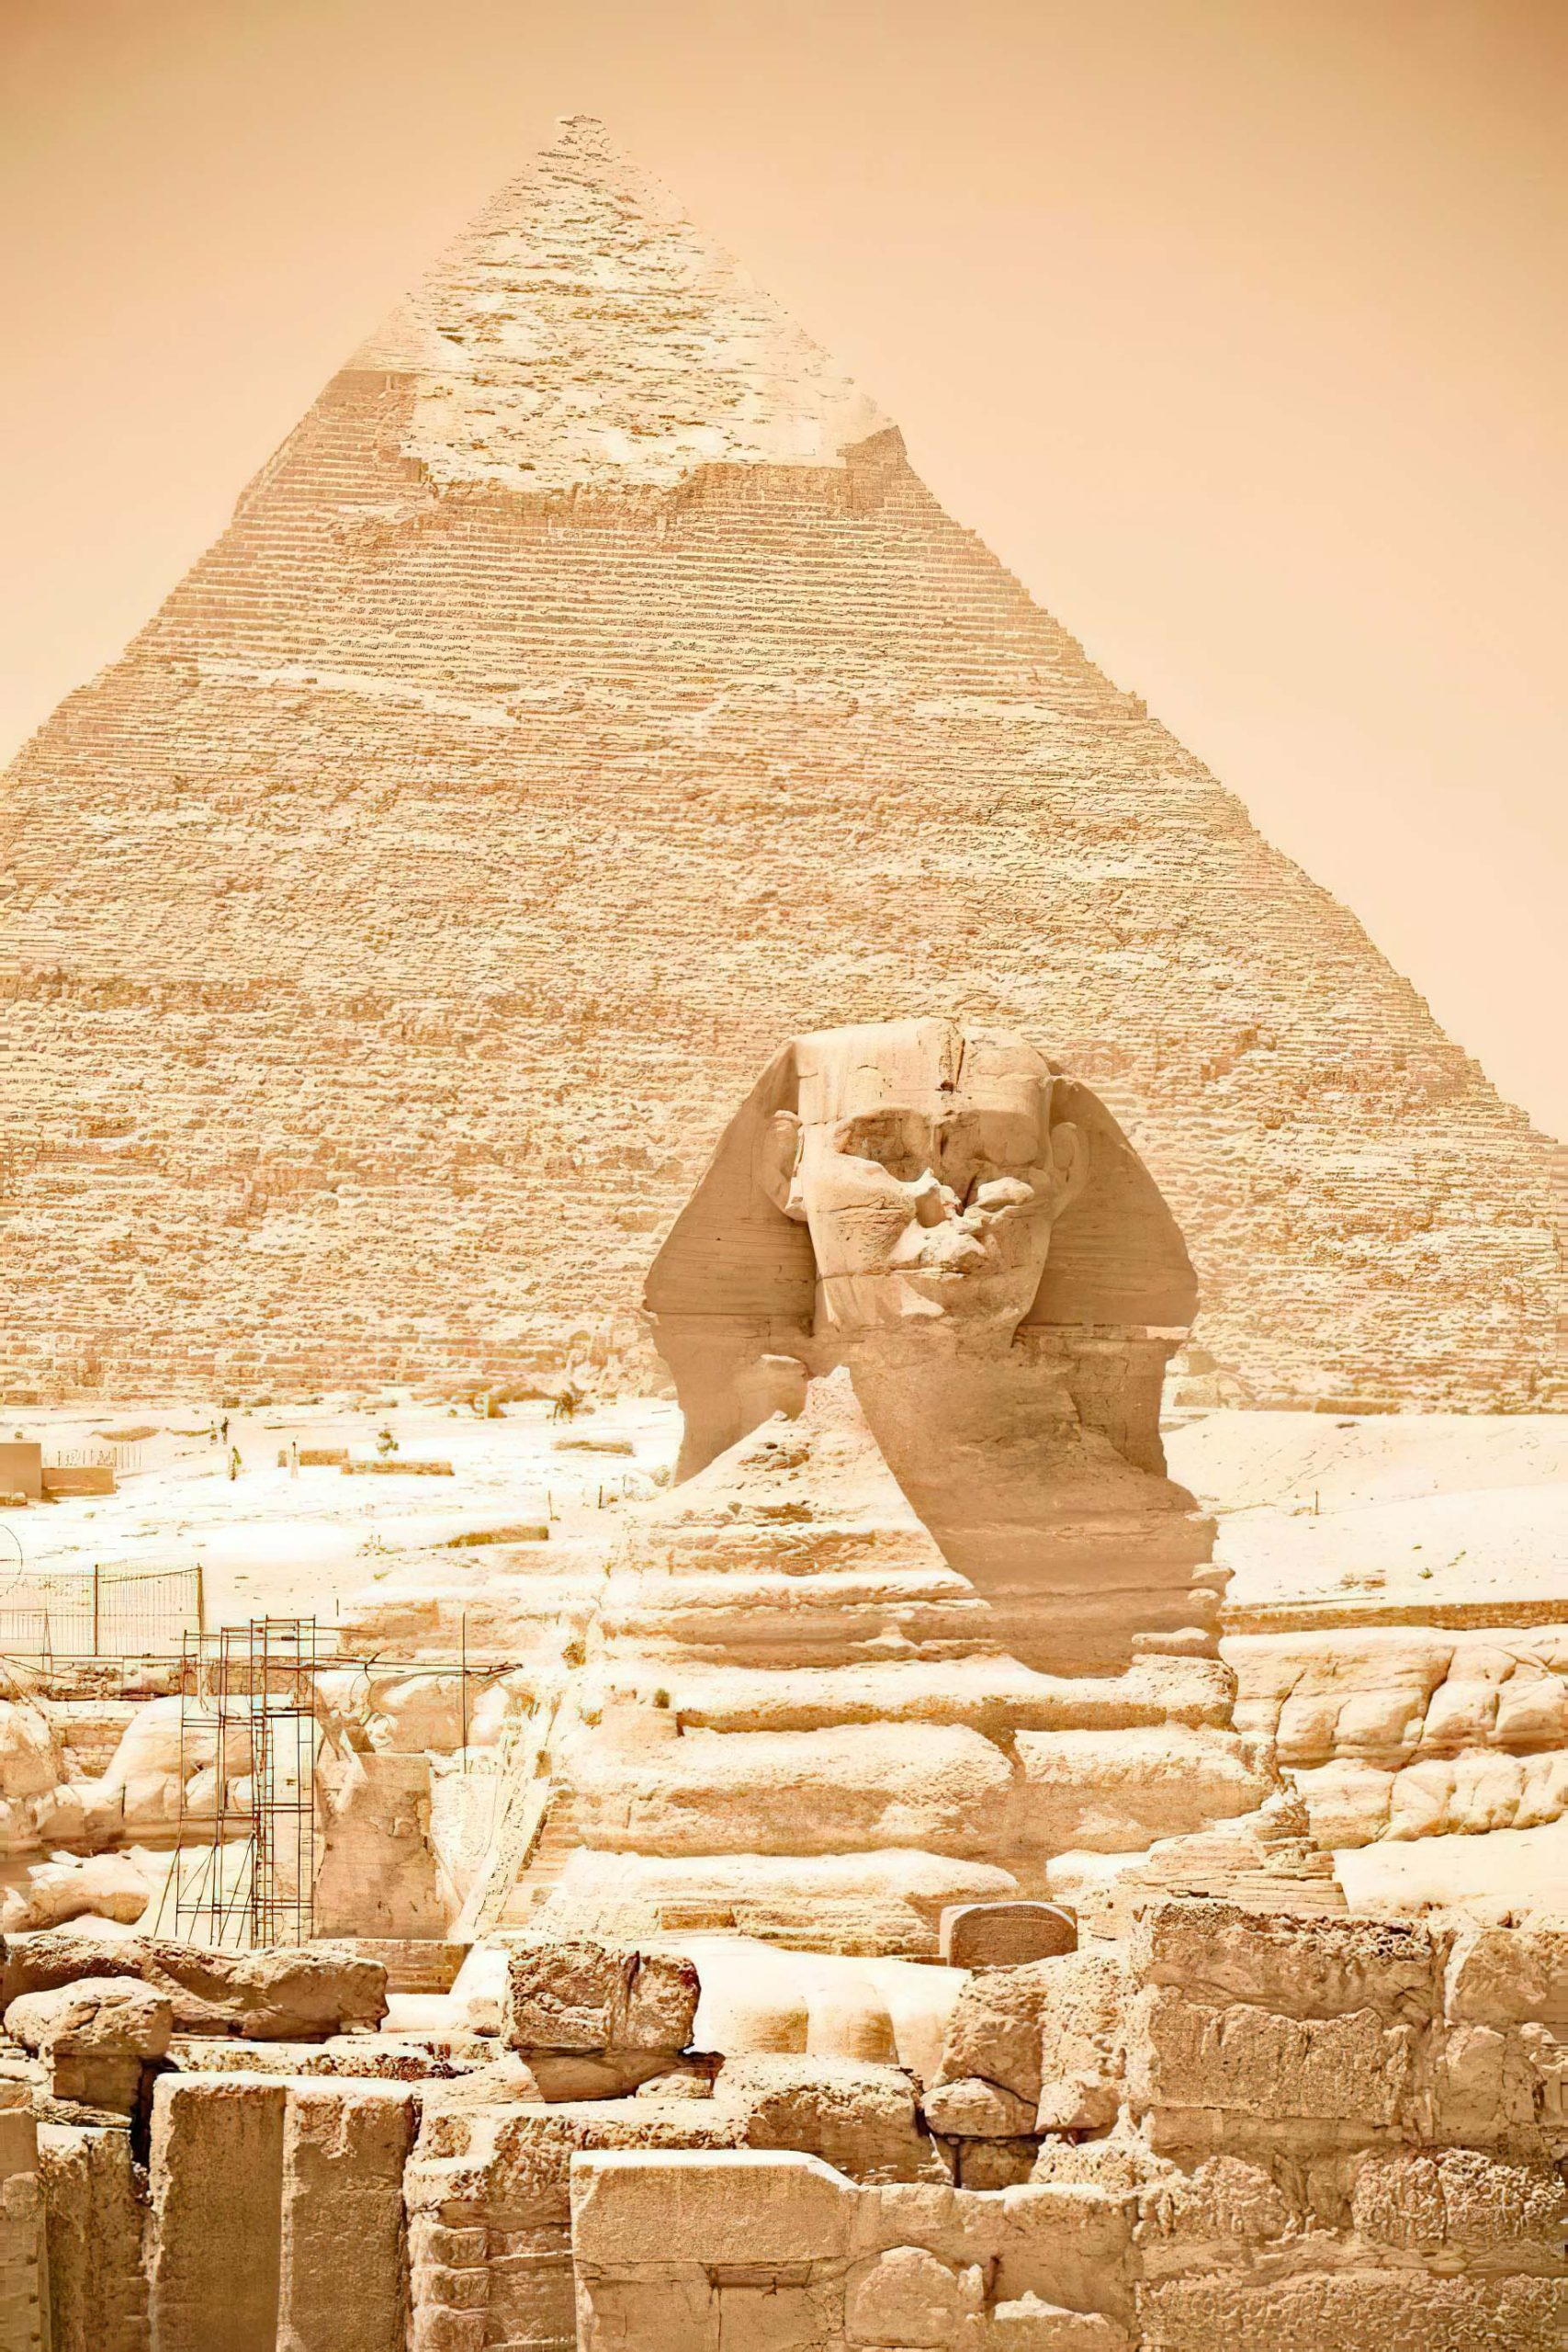 JW Marriott Hotel Cairo – Cairo, Egypt – Great Pyramids of Giza & Sphinx